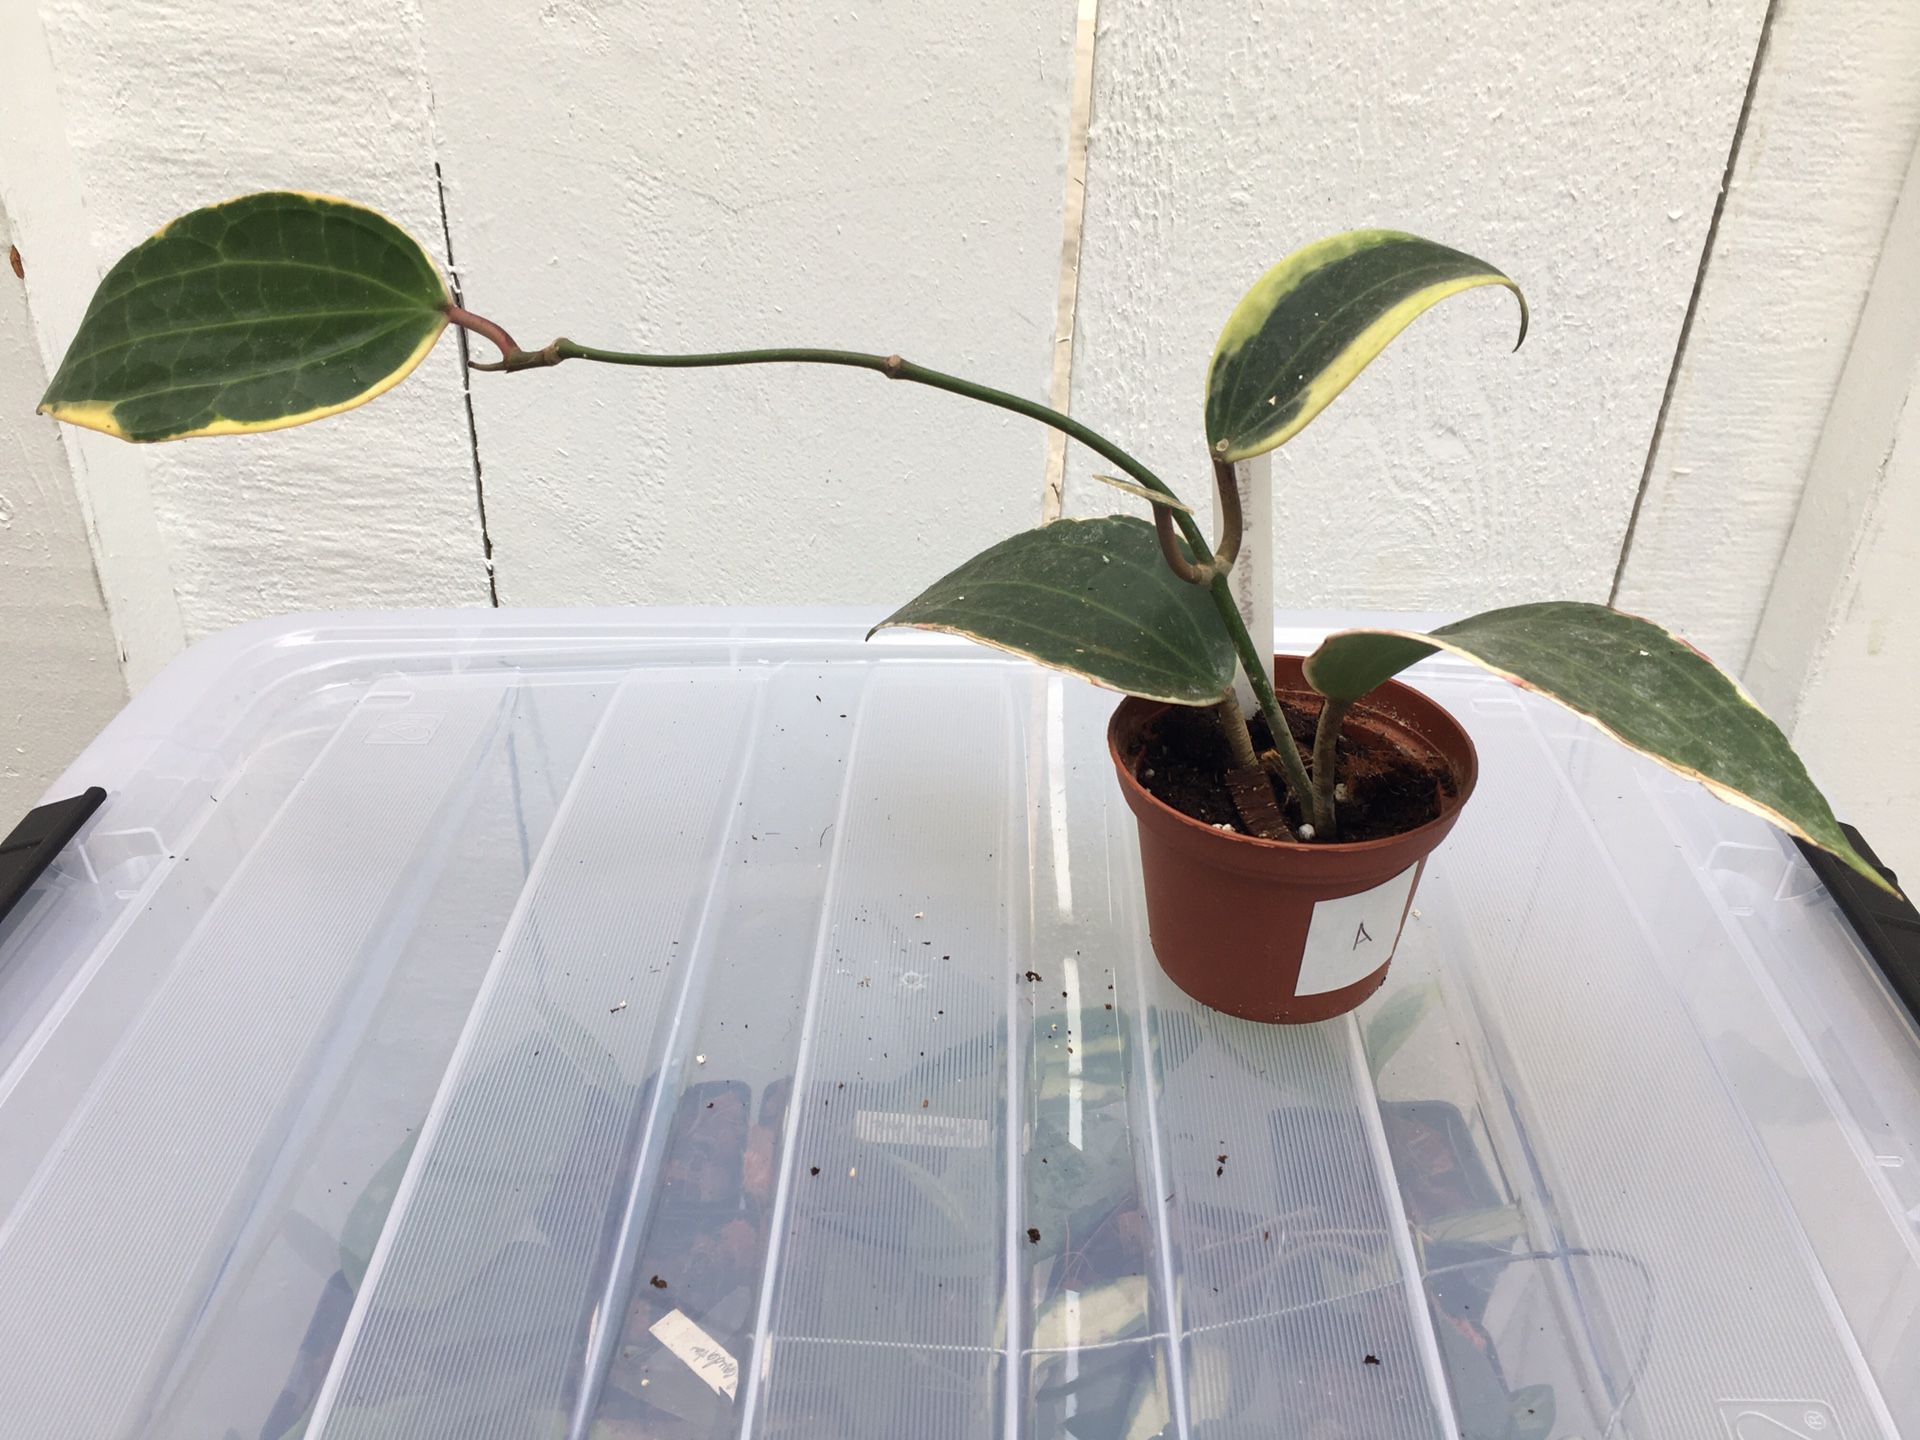 Hoya macrophylla albomarginata plant in 3” pot (A)